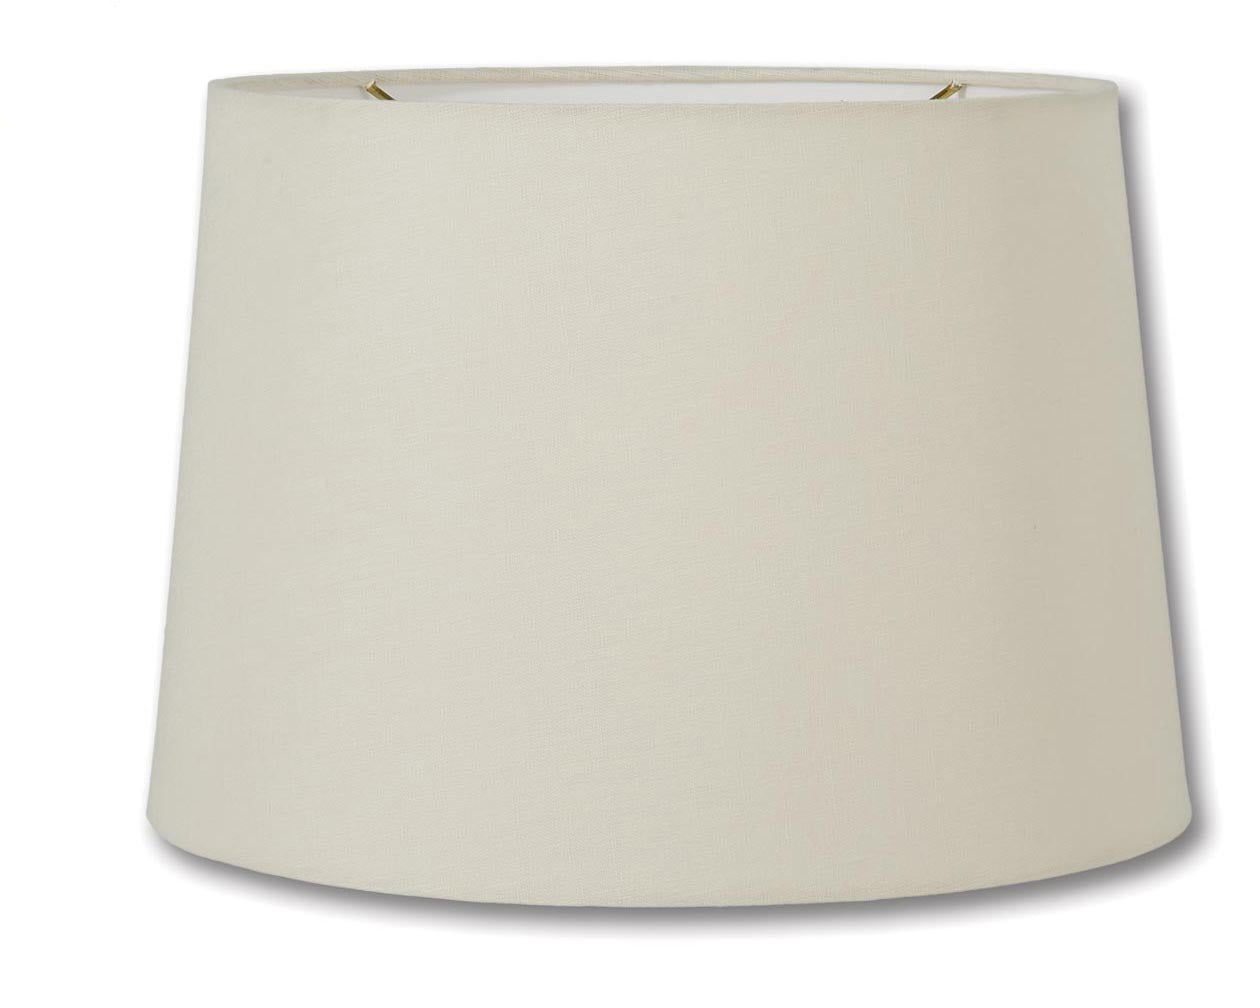 Retro Drum Lamp Shades - Eggshell Color, 100% Fine Linen Material